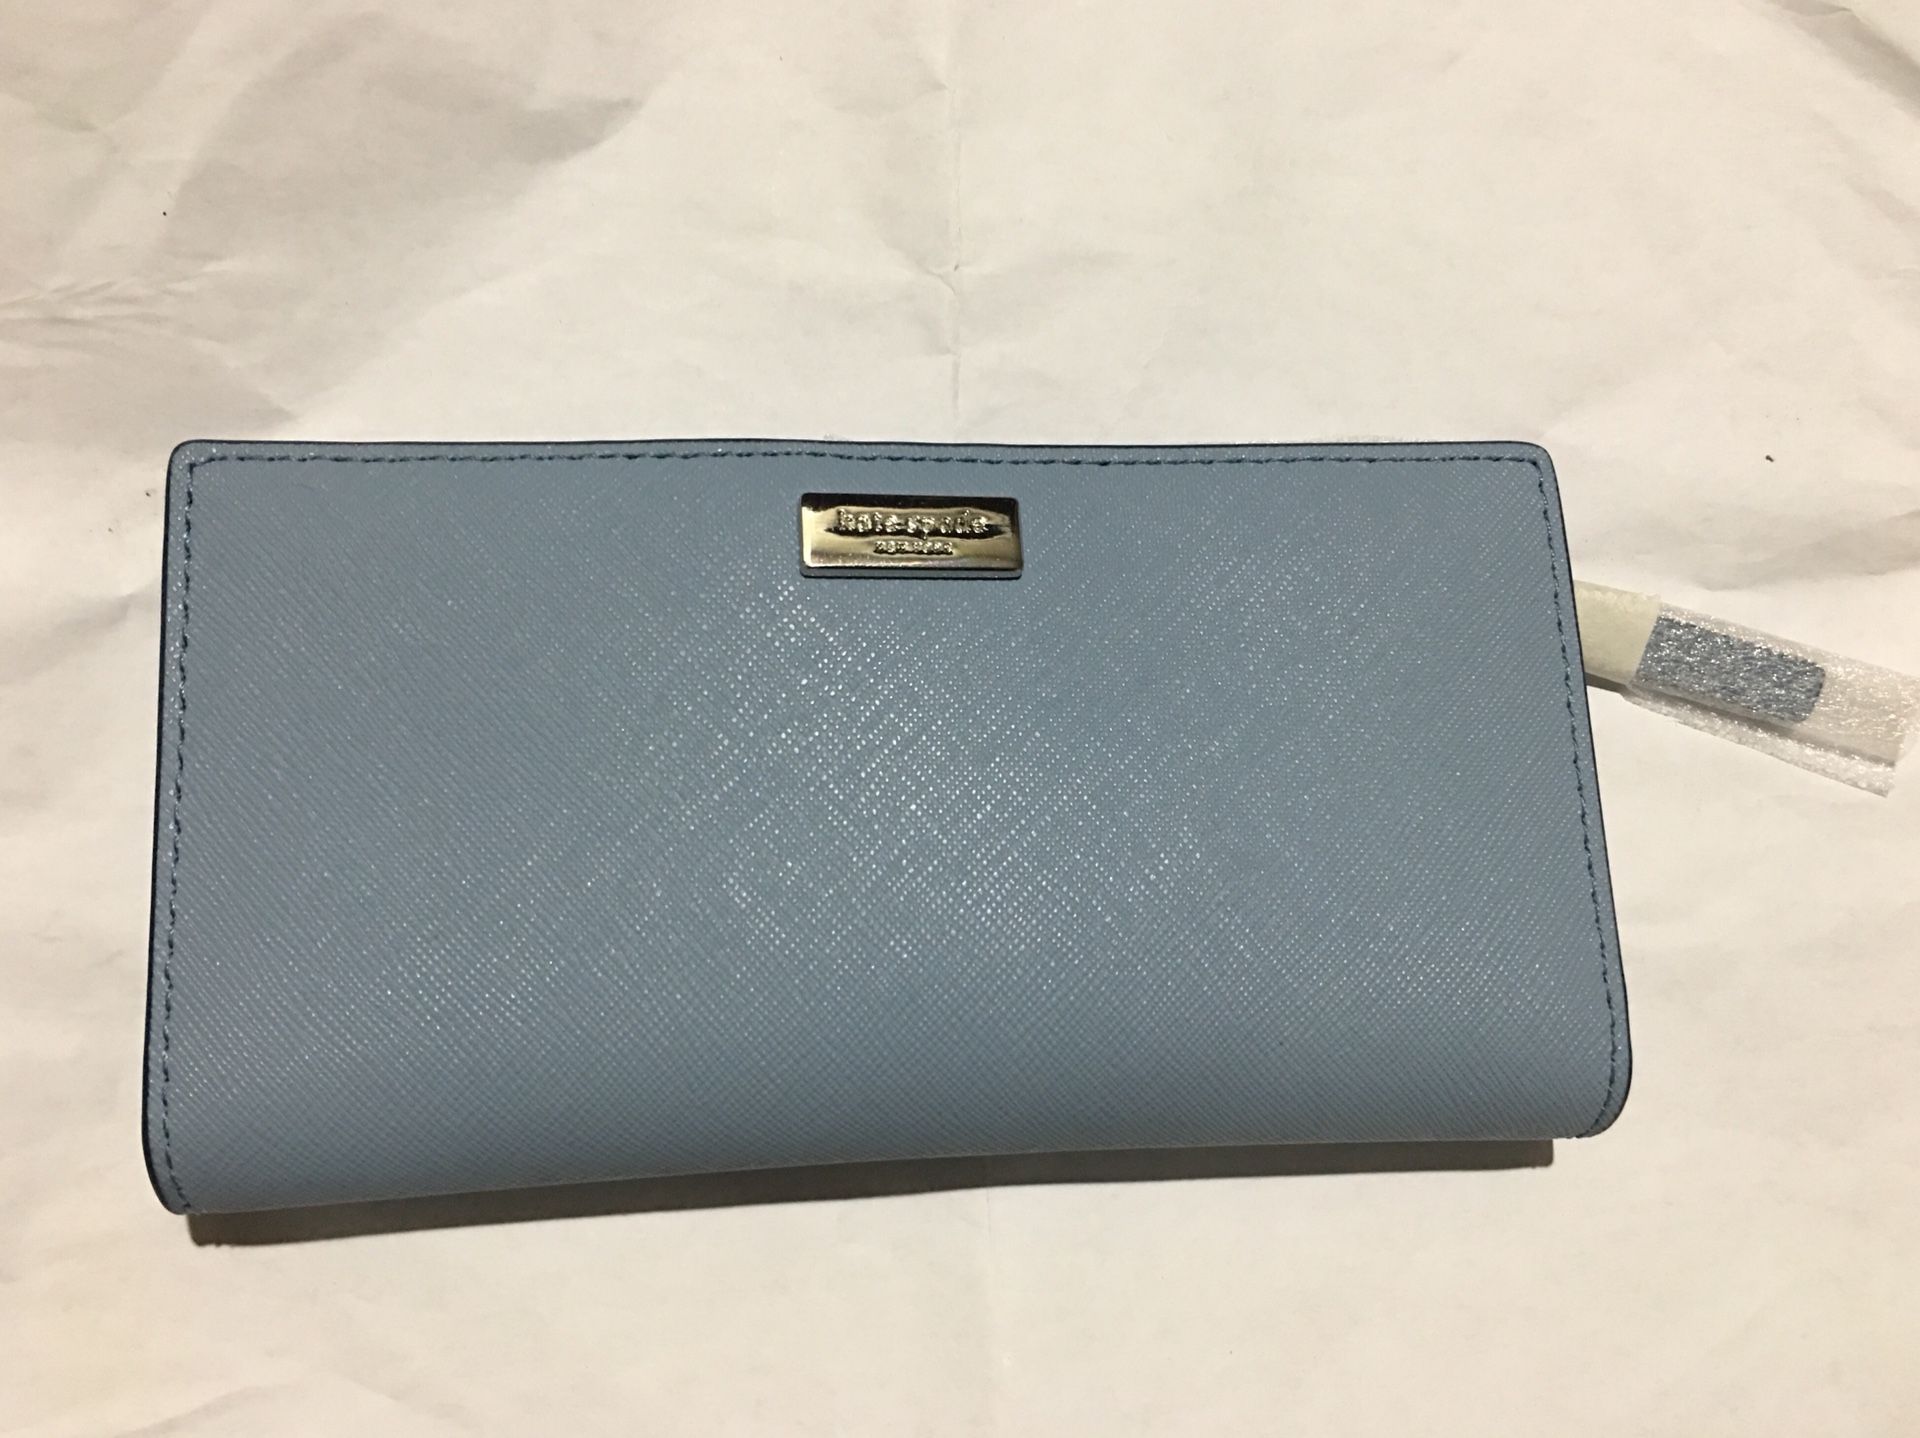 NWT Kate Spade Stacy Laurel Way Leather Wallet Clutch BLUE WLRU2673 $119